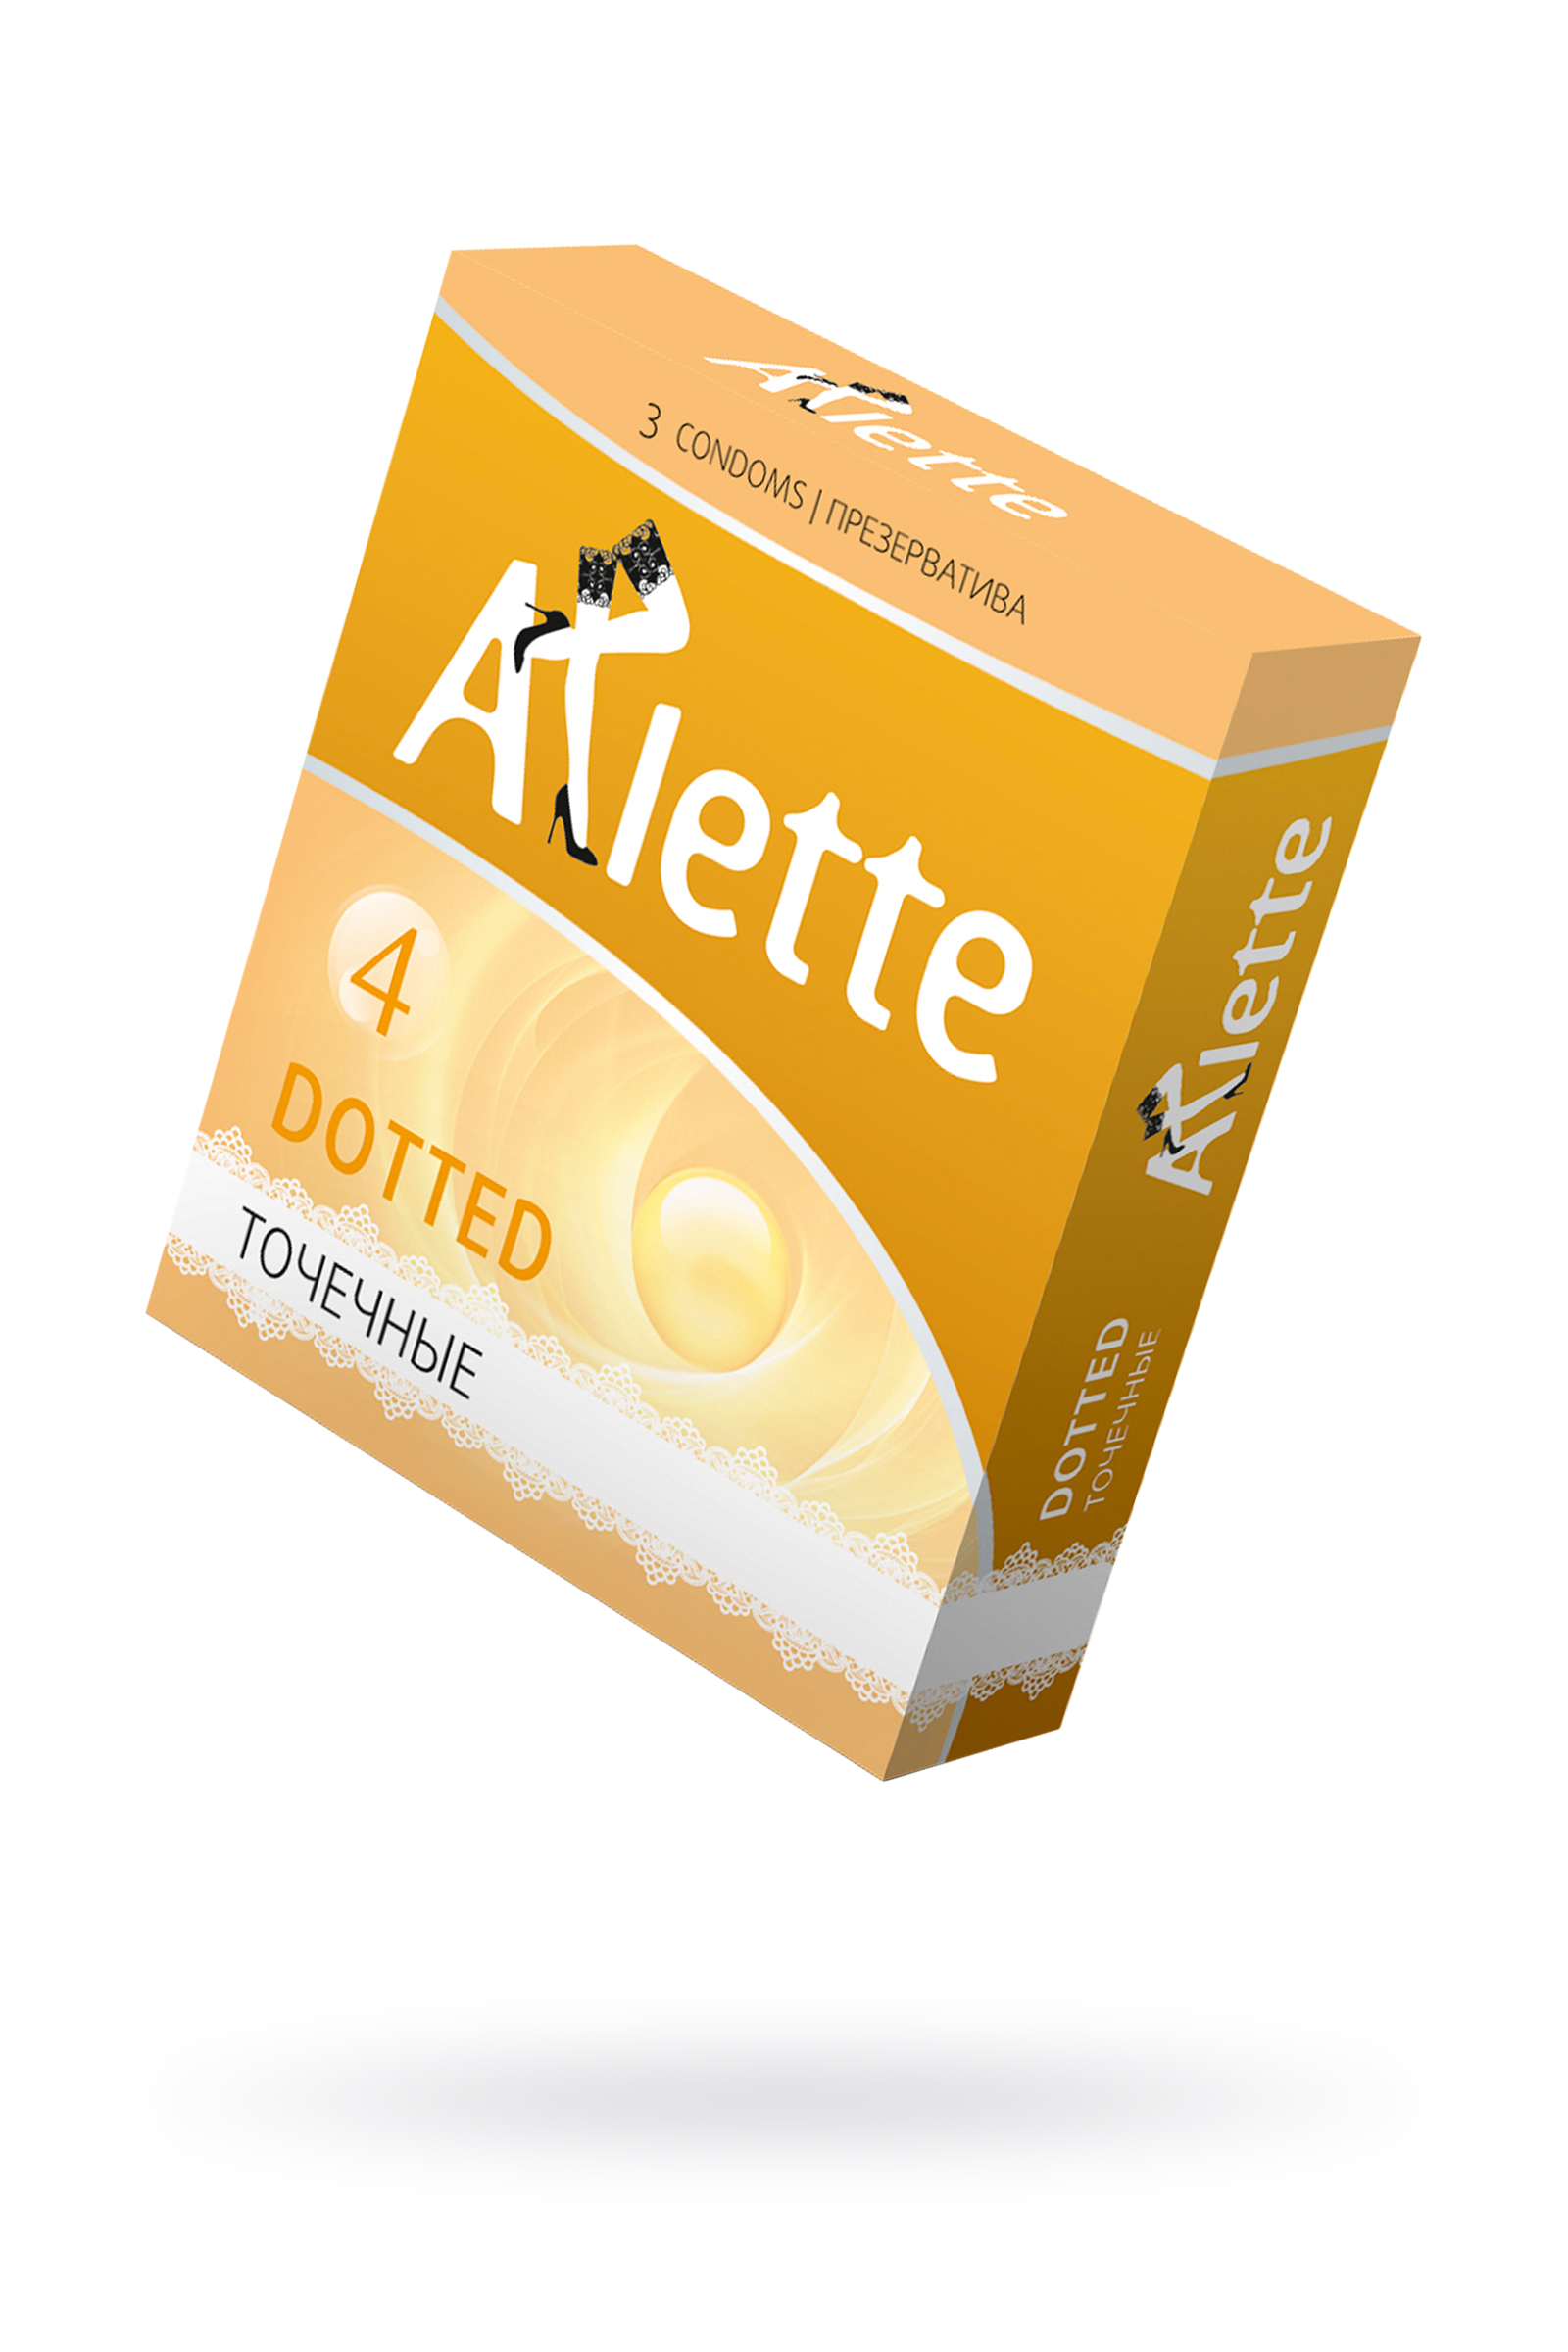 Презервативы Arlette Dotted c точечной структурой, 3 шт.